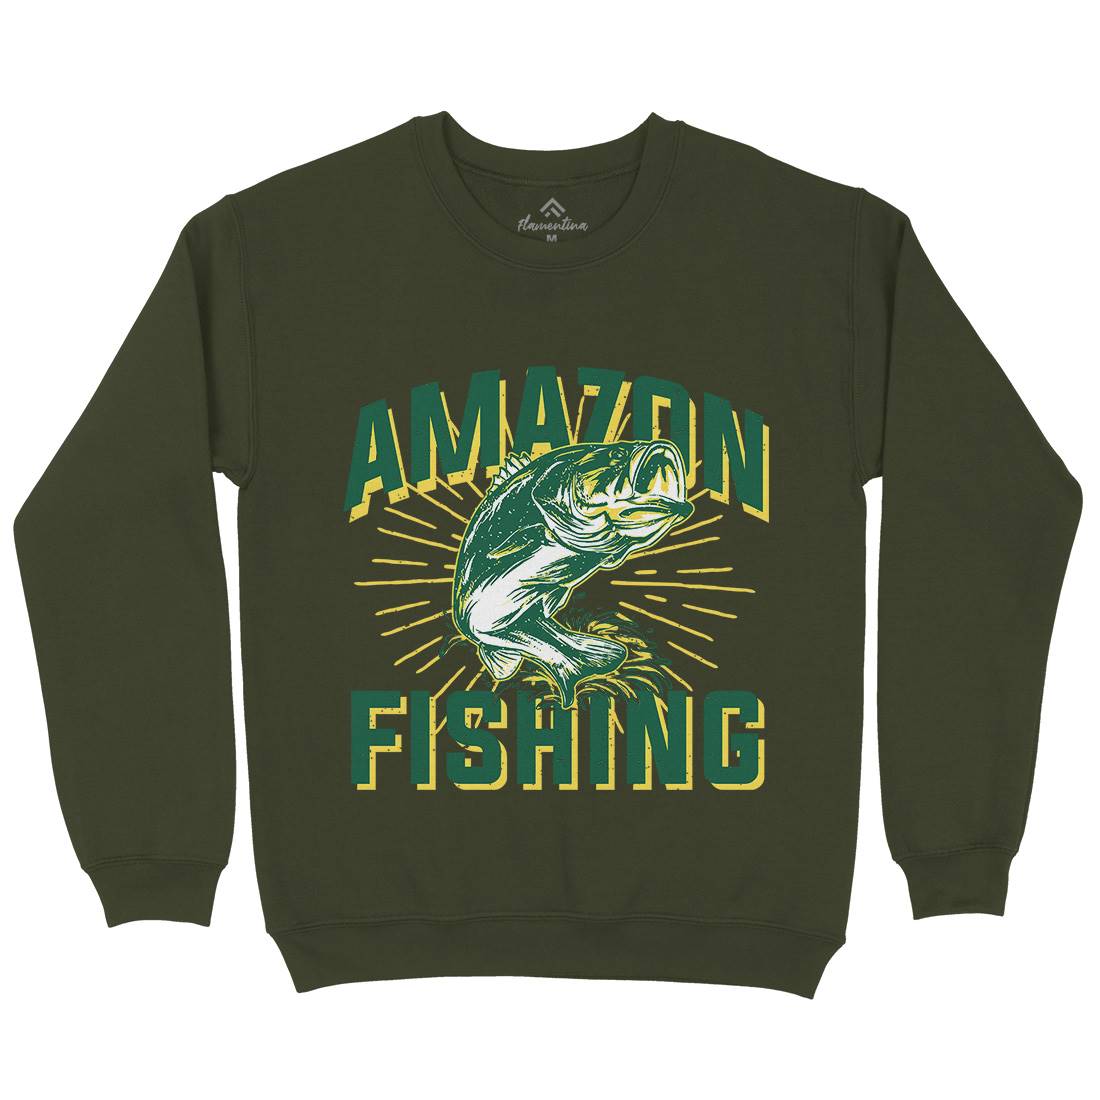 Amazon Mens Crew Neck Sweatshirt Fishing B678